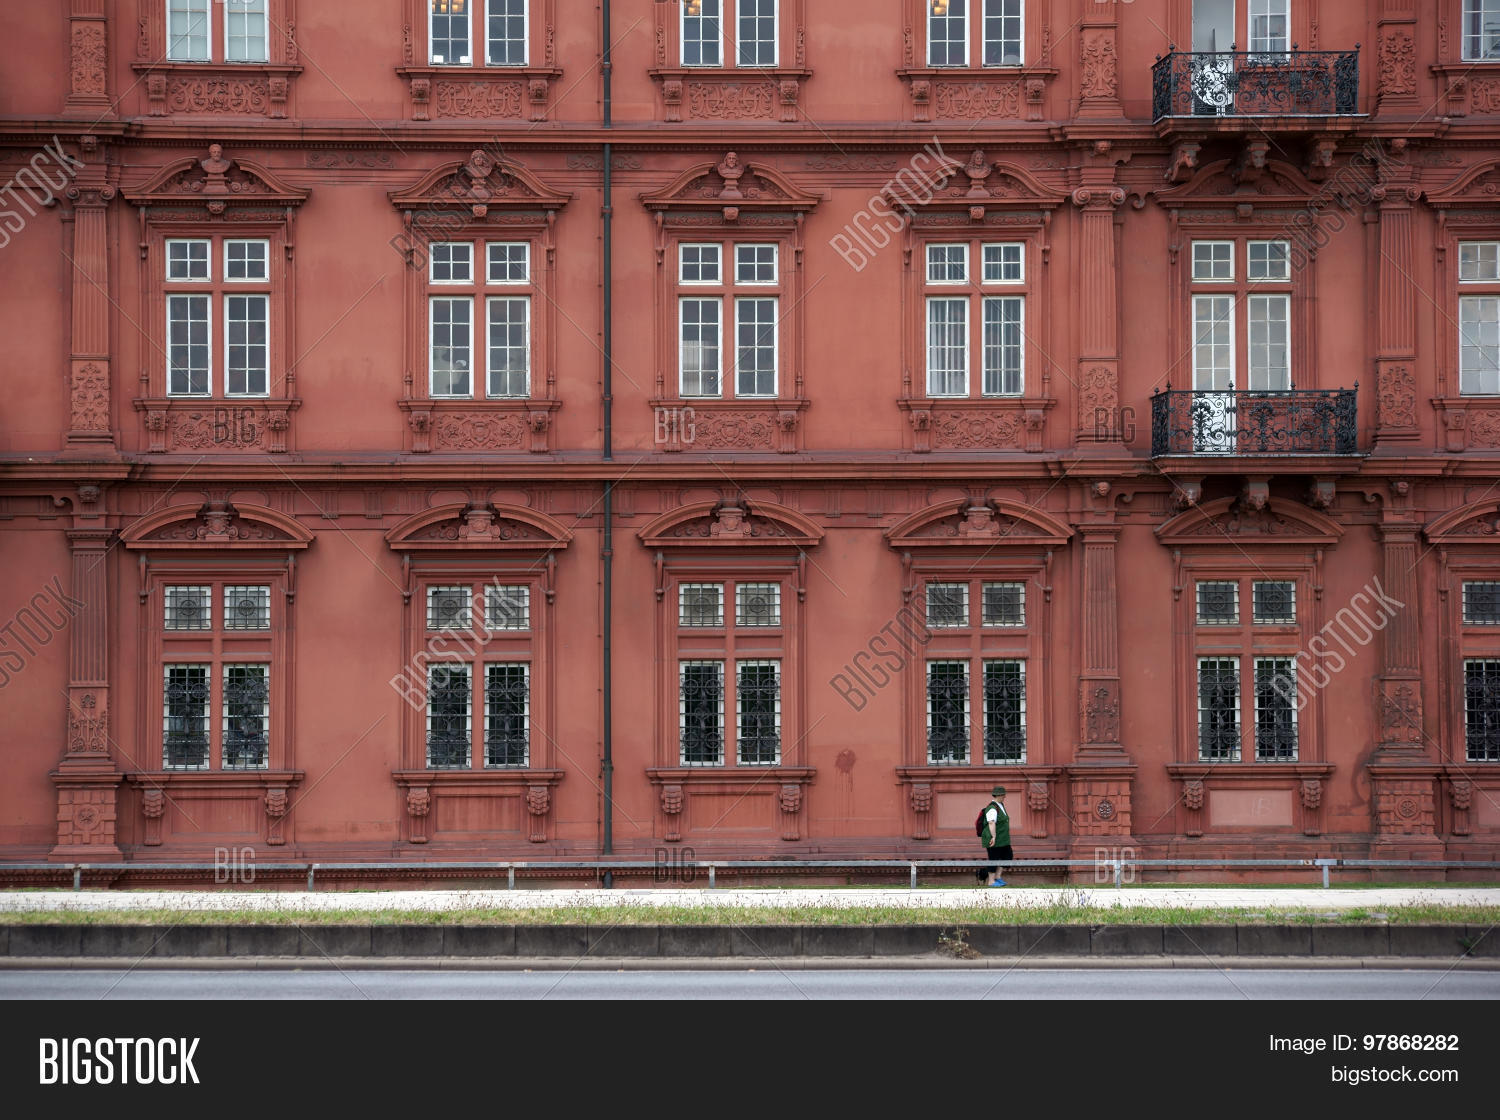 Electoral Palace, Mainz Pics, Man Made Collection